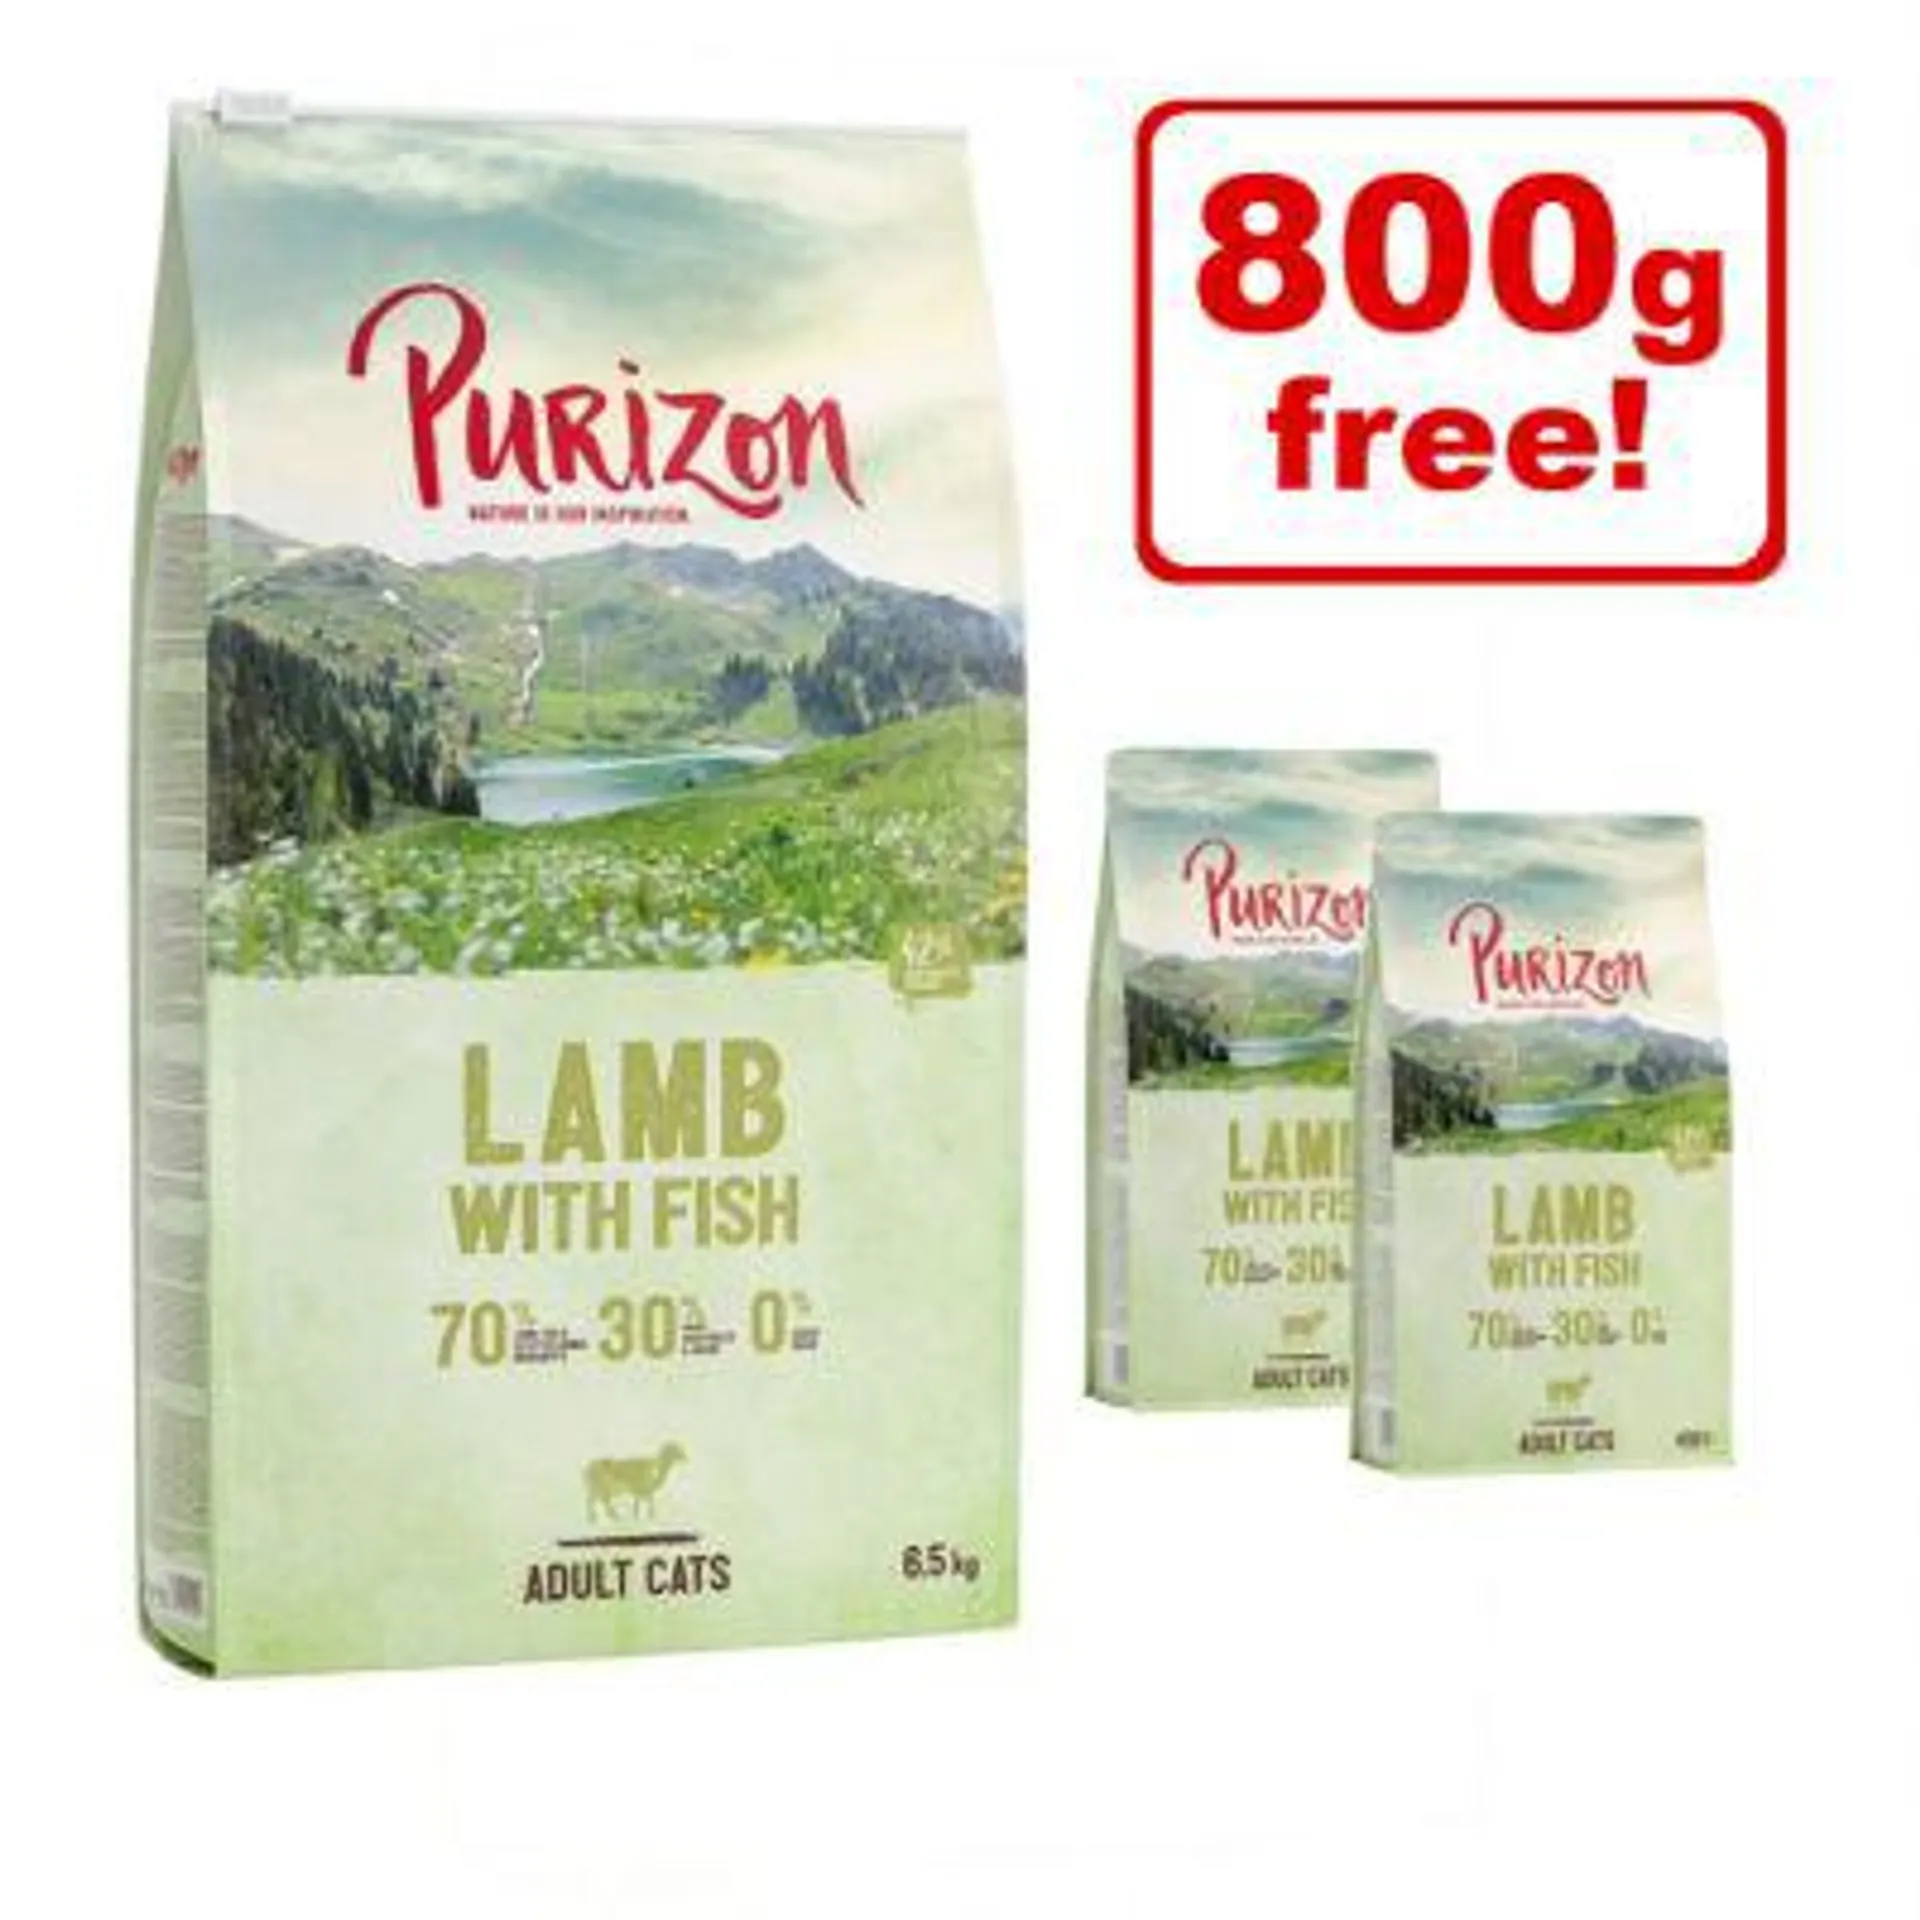 6.5kg Purizon Dry Cat Food + 2 x 400g Extra Free!*